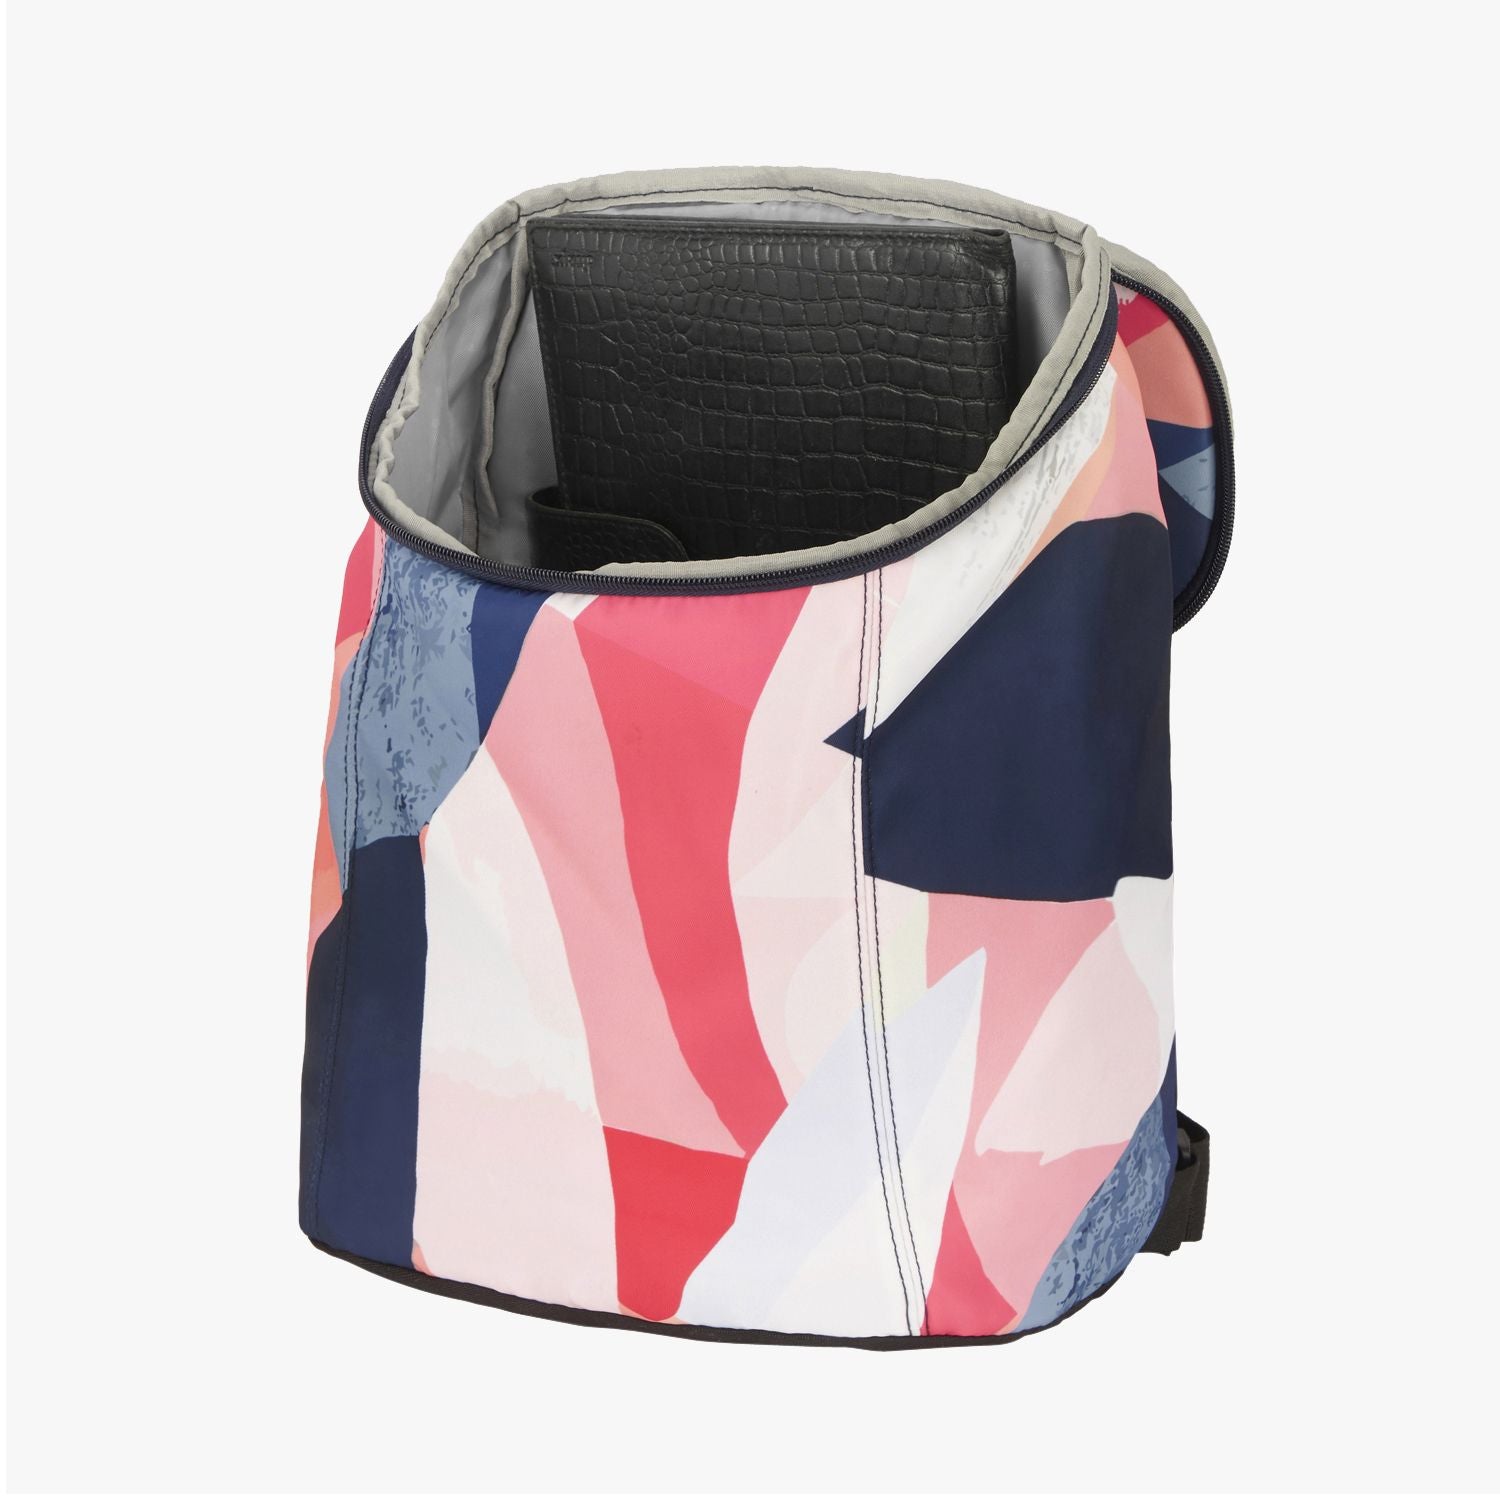 Genie Vougish 13.5L Multicolor Small Backpack